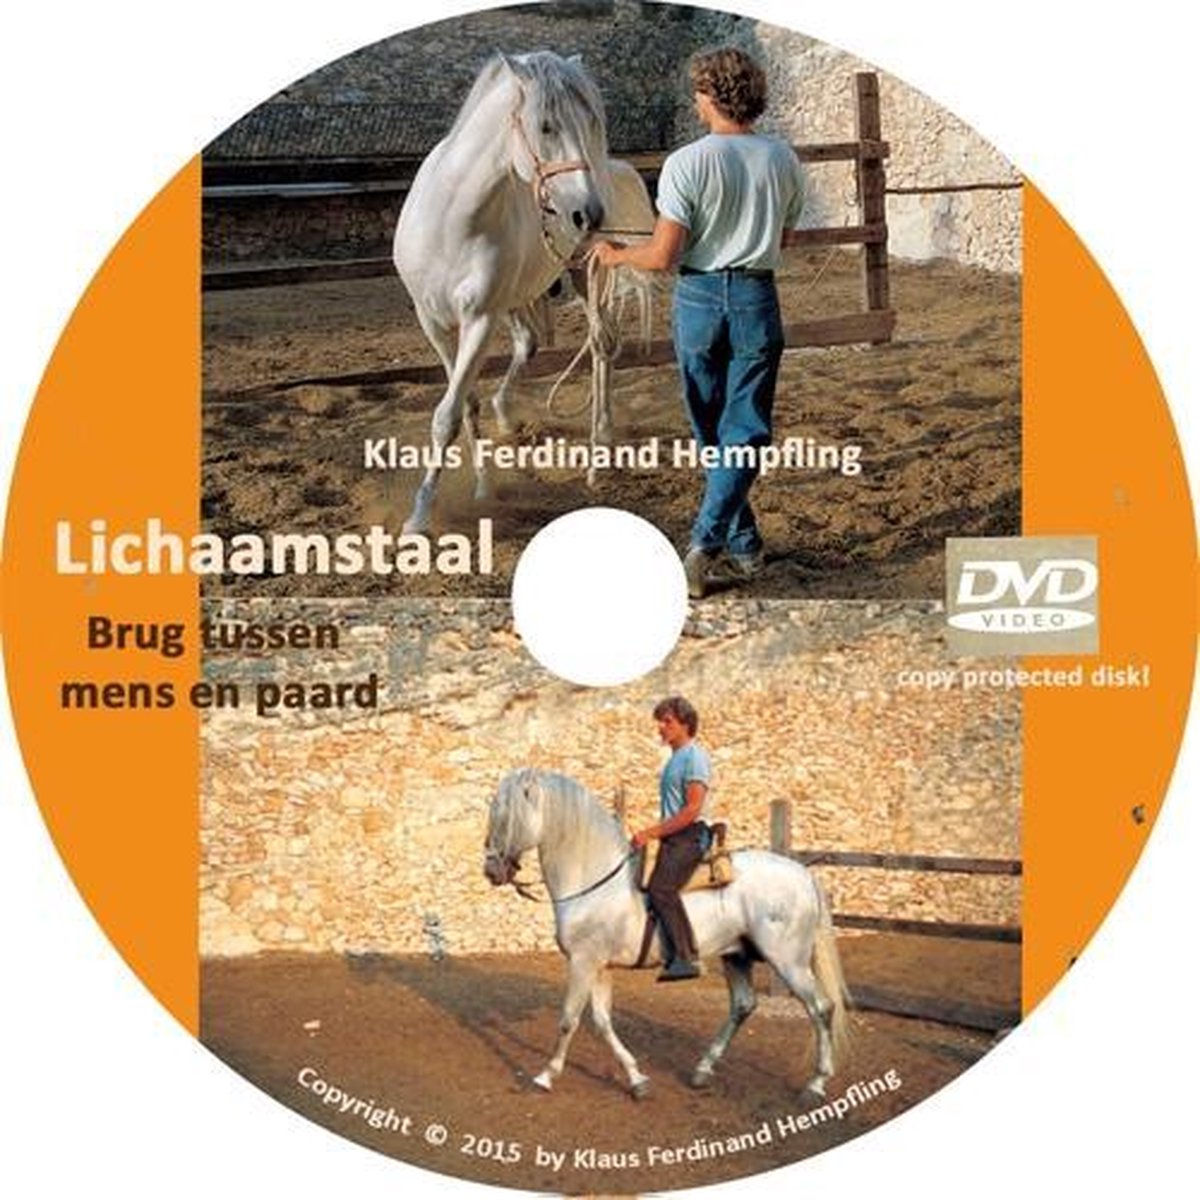 Lichaamstaal - Brug tussen mens en paard | Klaus Ferdinand Hempfling (Dvd)  | Dvd's | bol.com